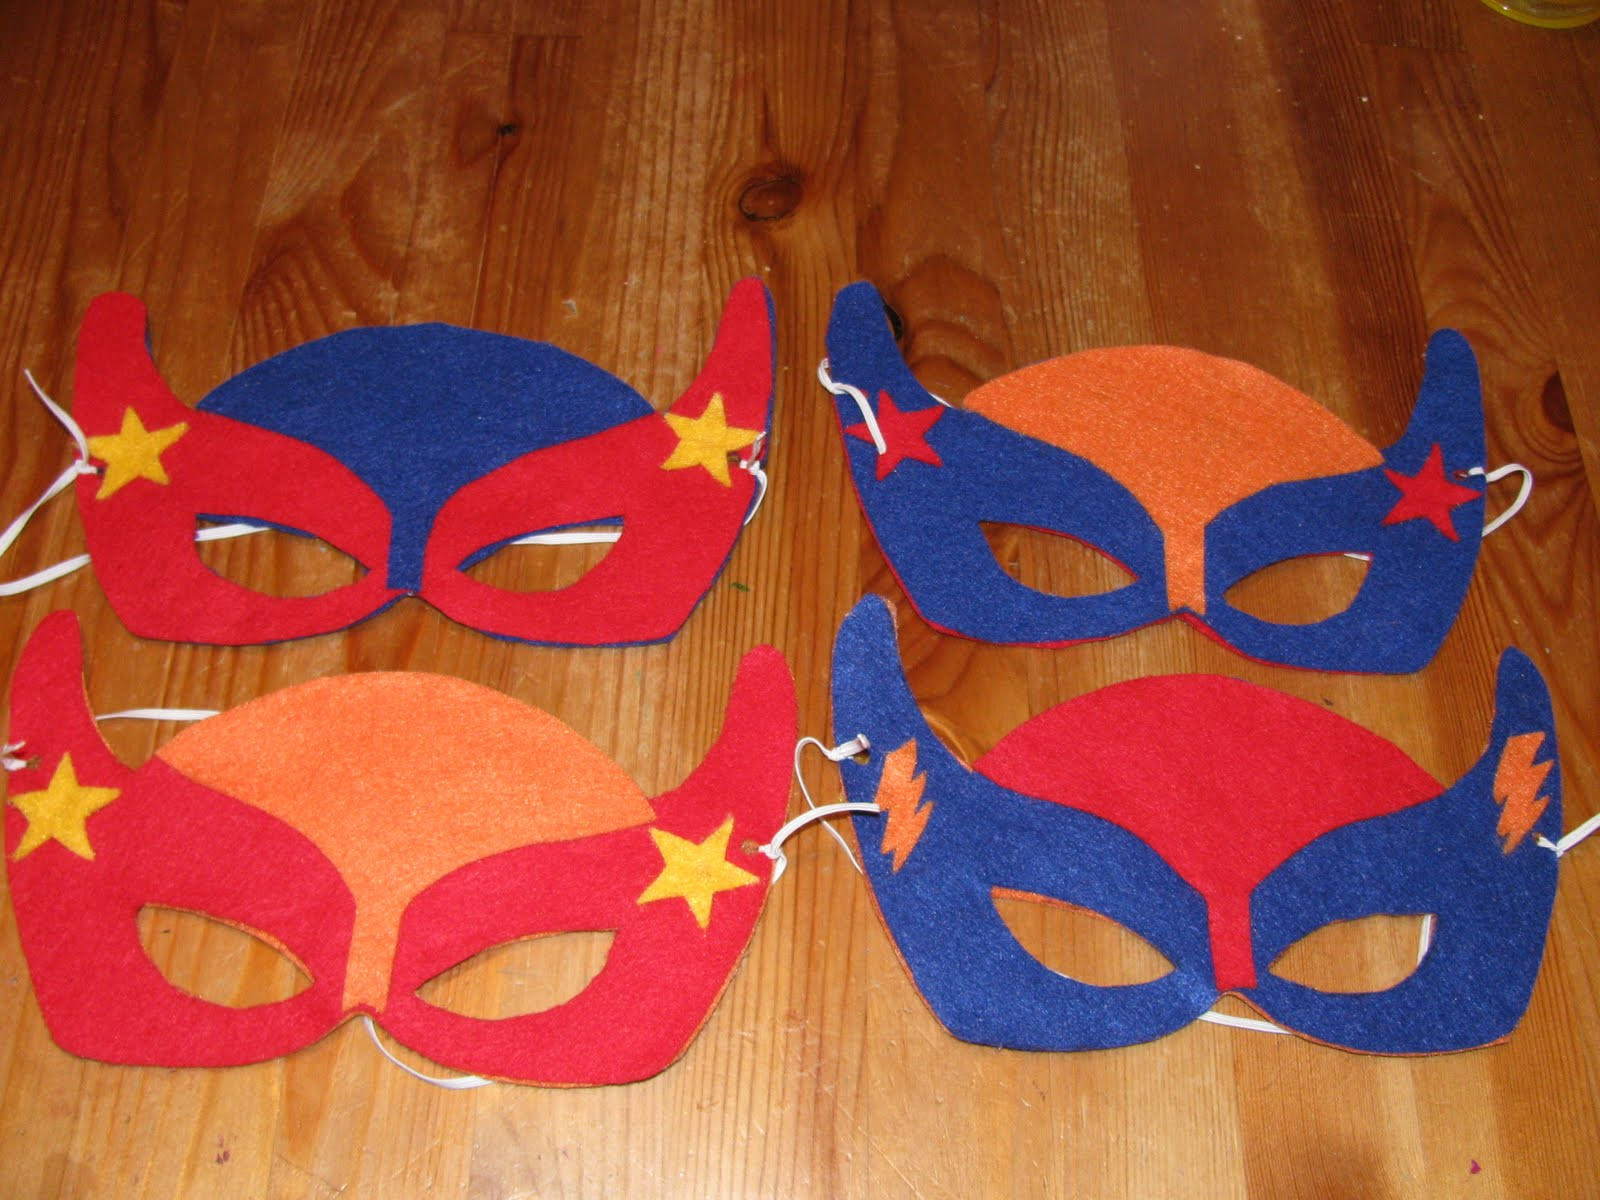 Best ideas about DIY Superhero Mask
. Save or Pin My Crafty Playground DIY Superhero masks Now.